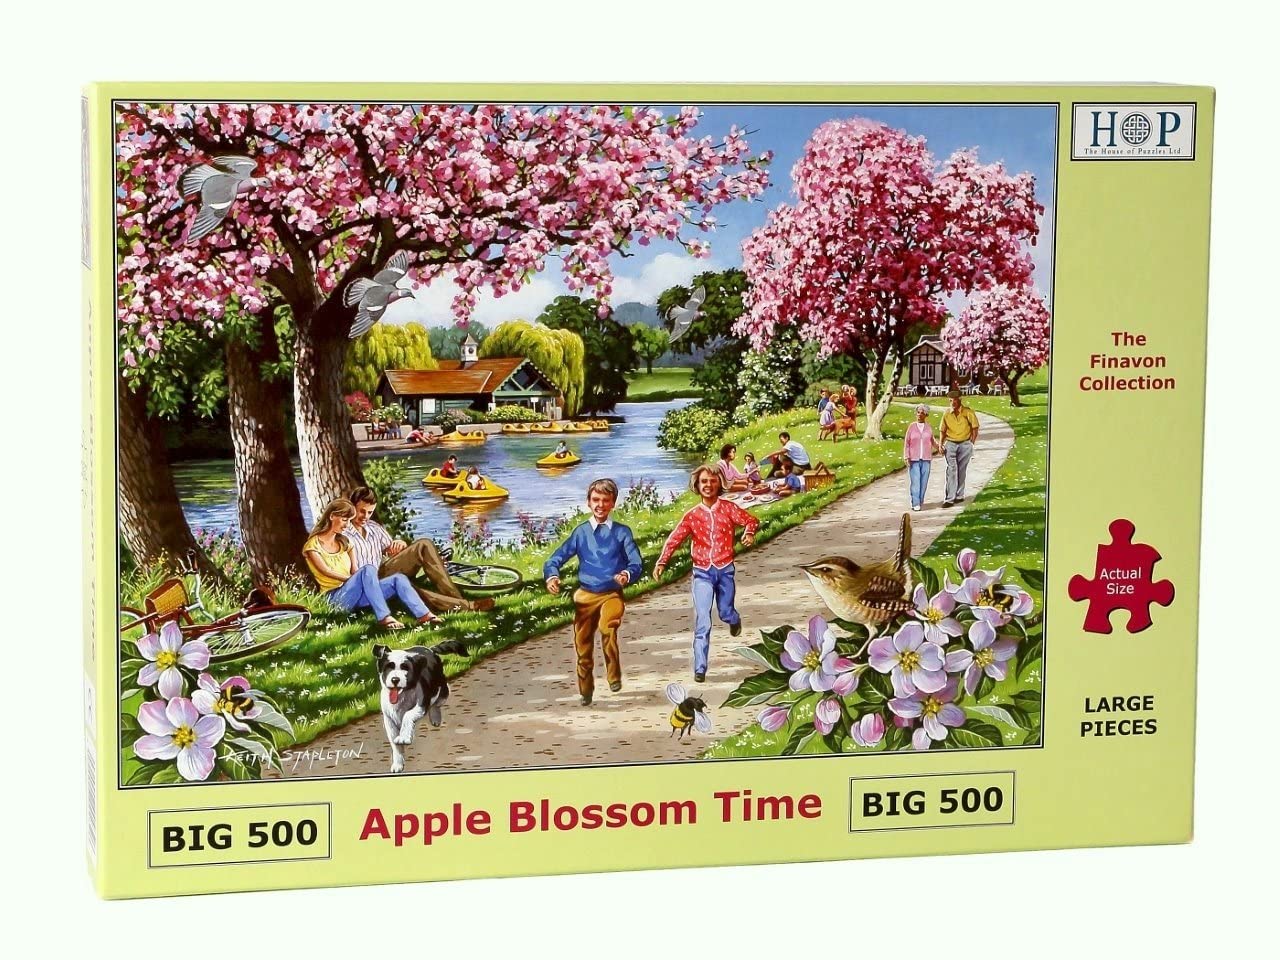 HOP Jigsaw Apple Blossom Time Big 500 Puzzle